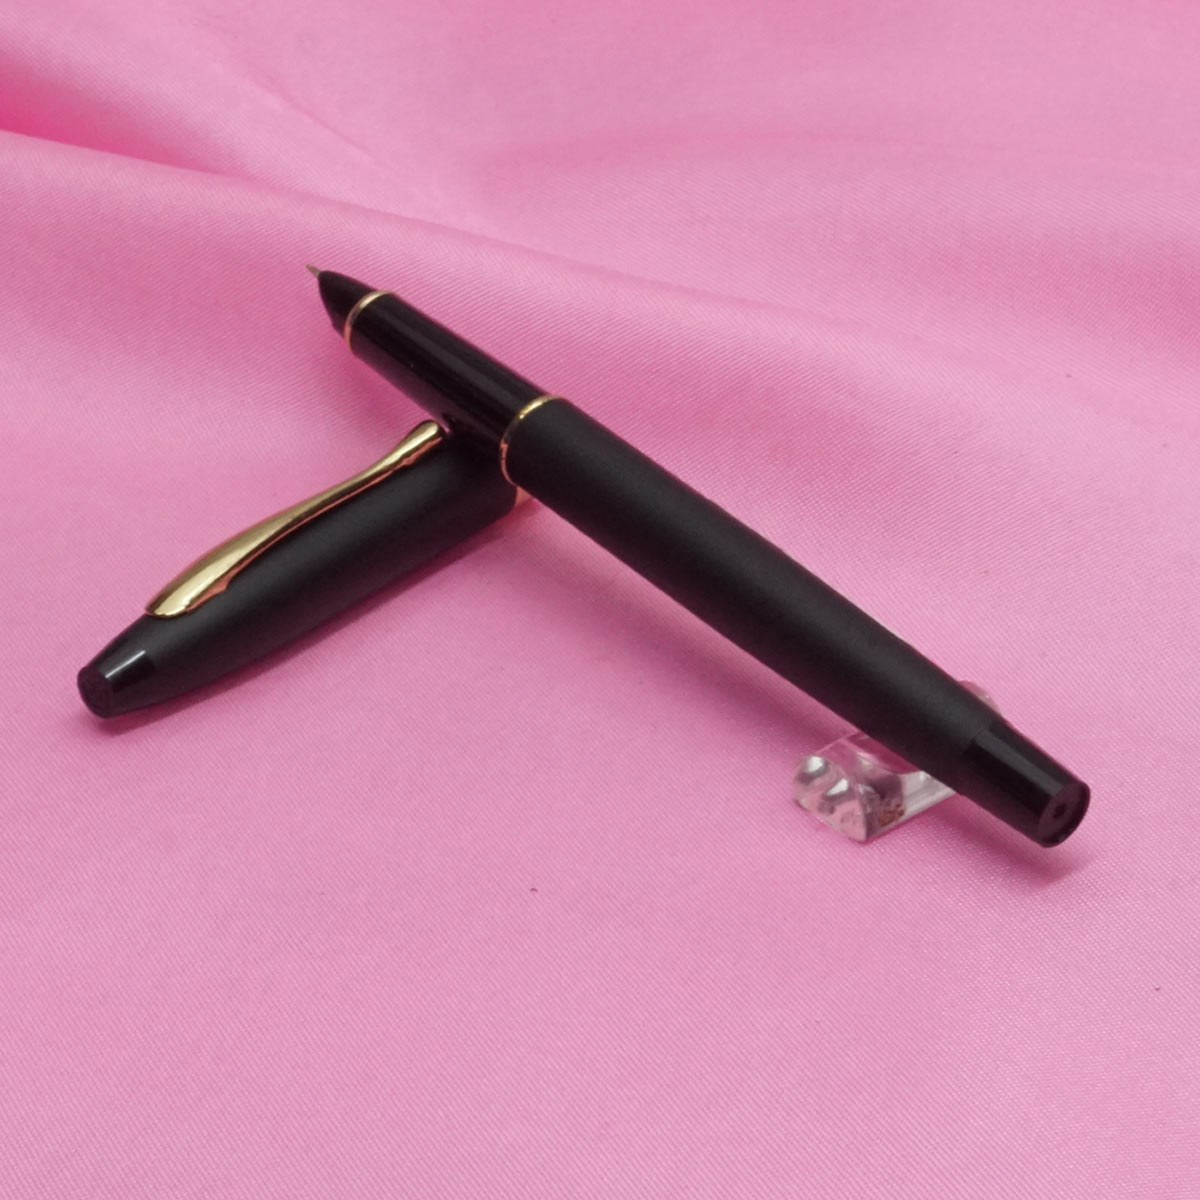 Hero 83 Model:17326 Slim Black Mat Finish Body With Gold Clip Fine Nib Fountain Pen